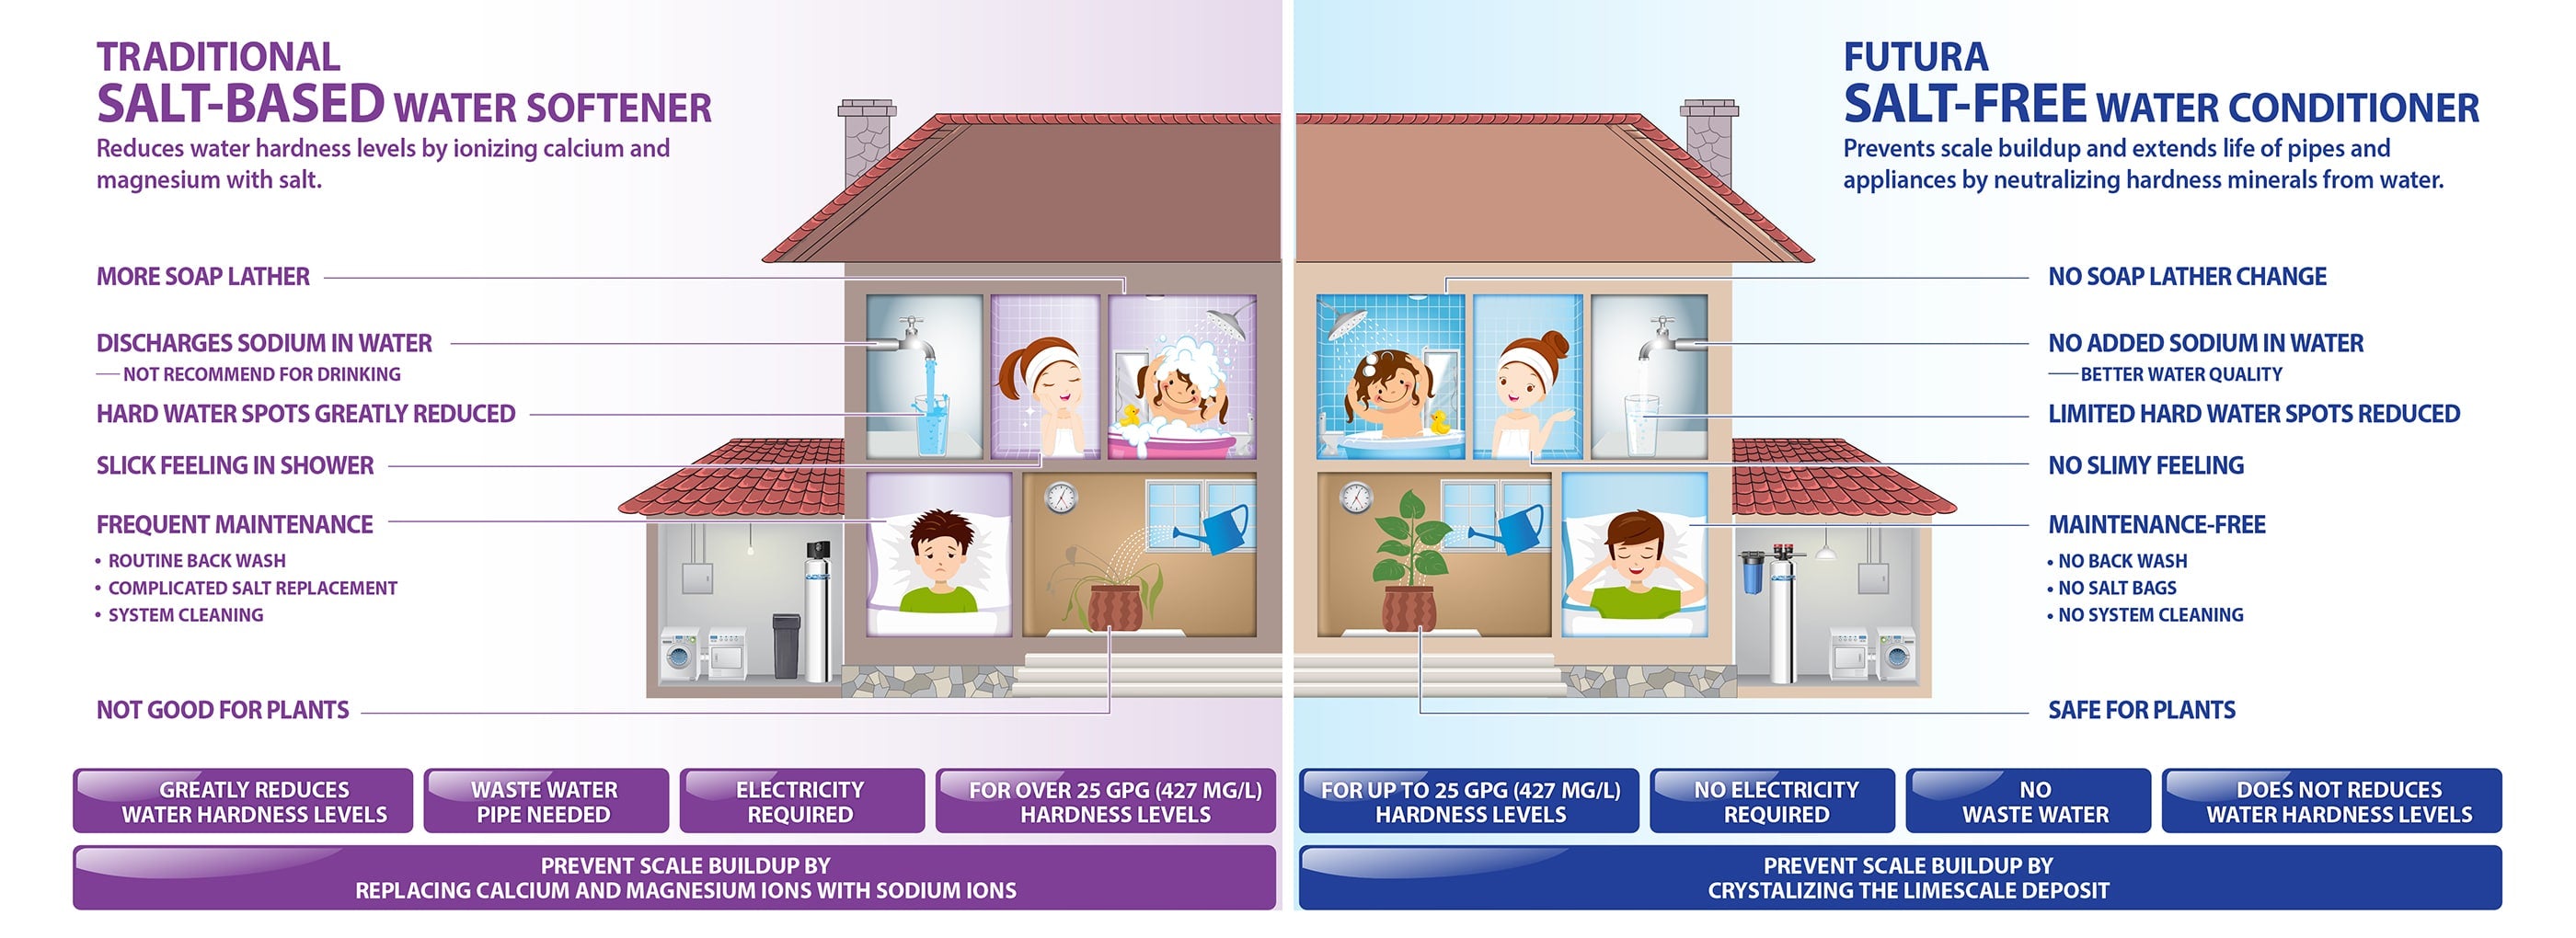 water softener vs water conditioner comparison image